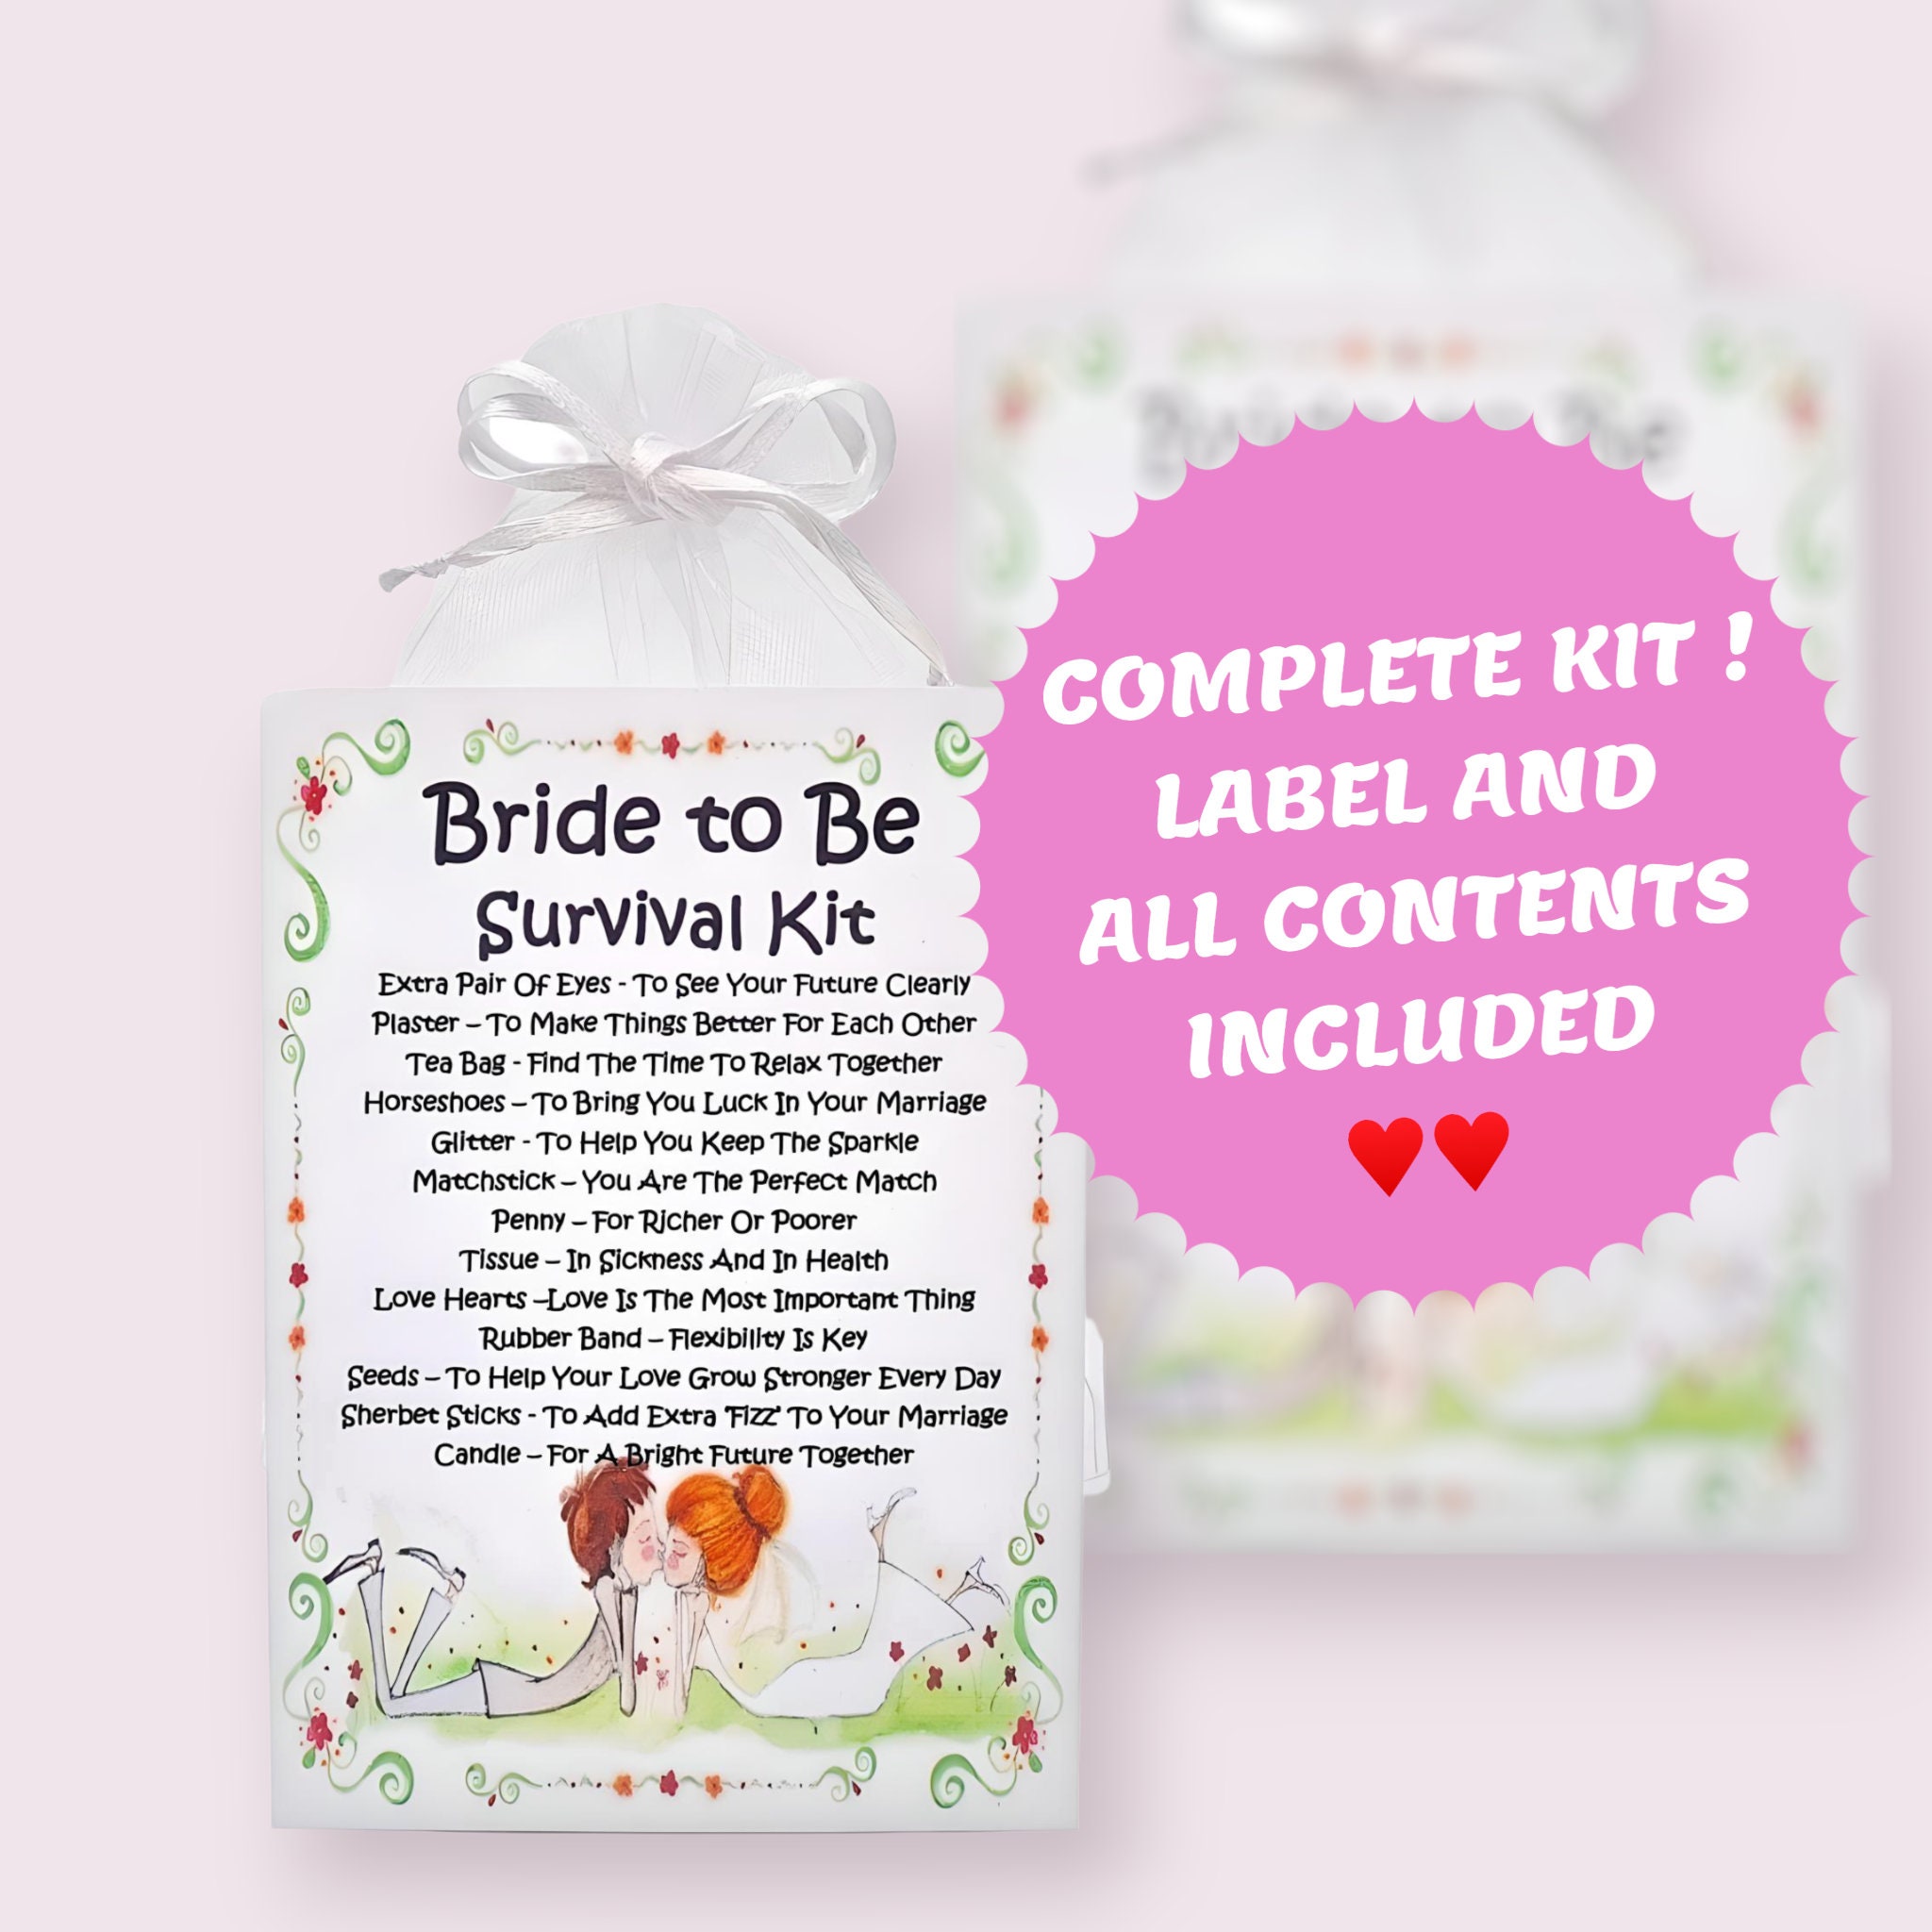 Wedding Day Survival Kit (Great Bridal Shower Gift!): Free Downloads